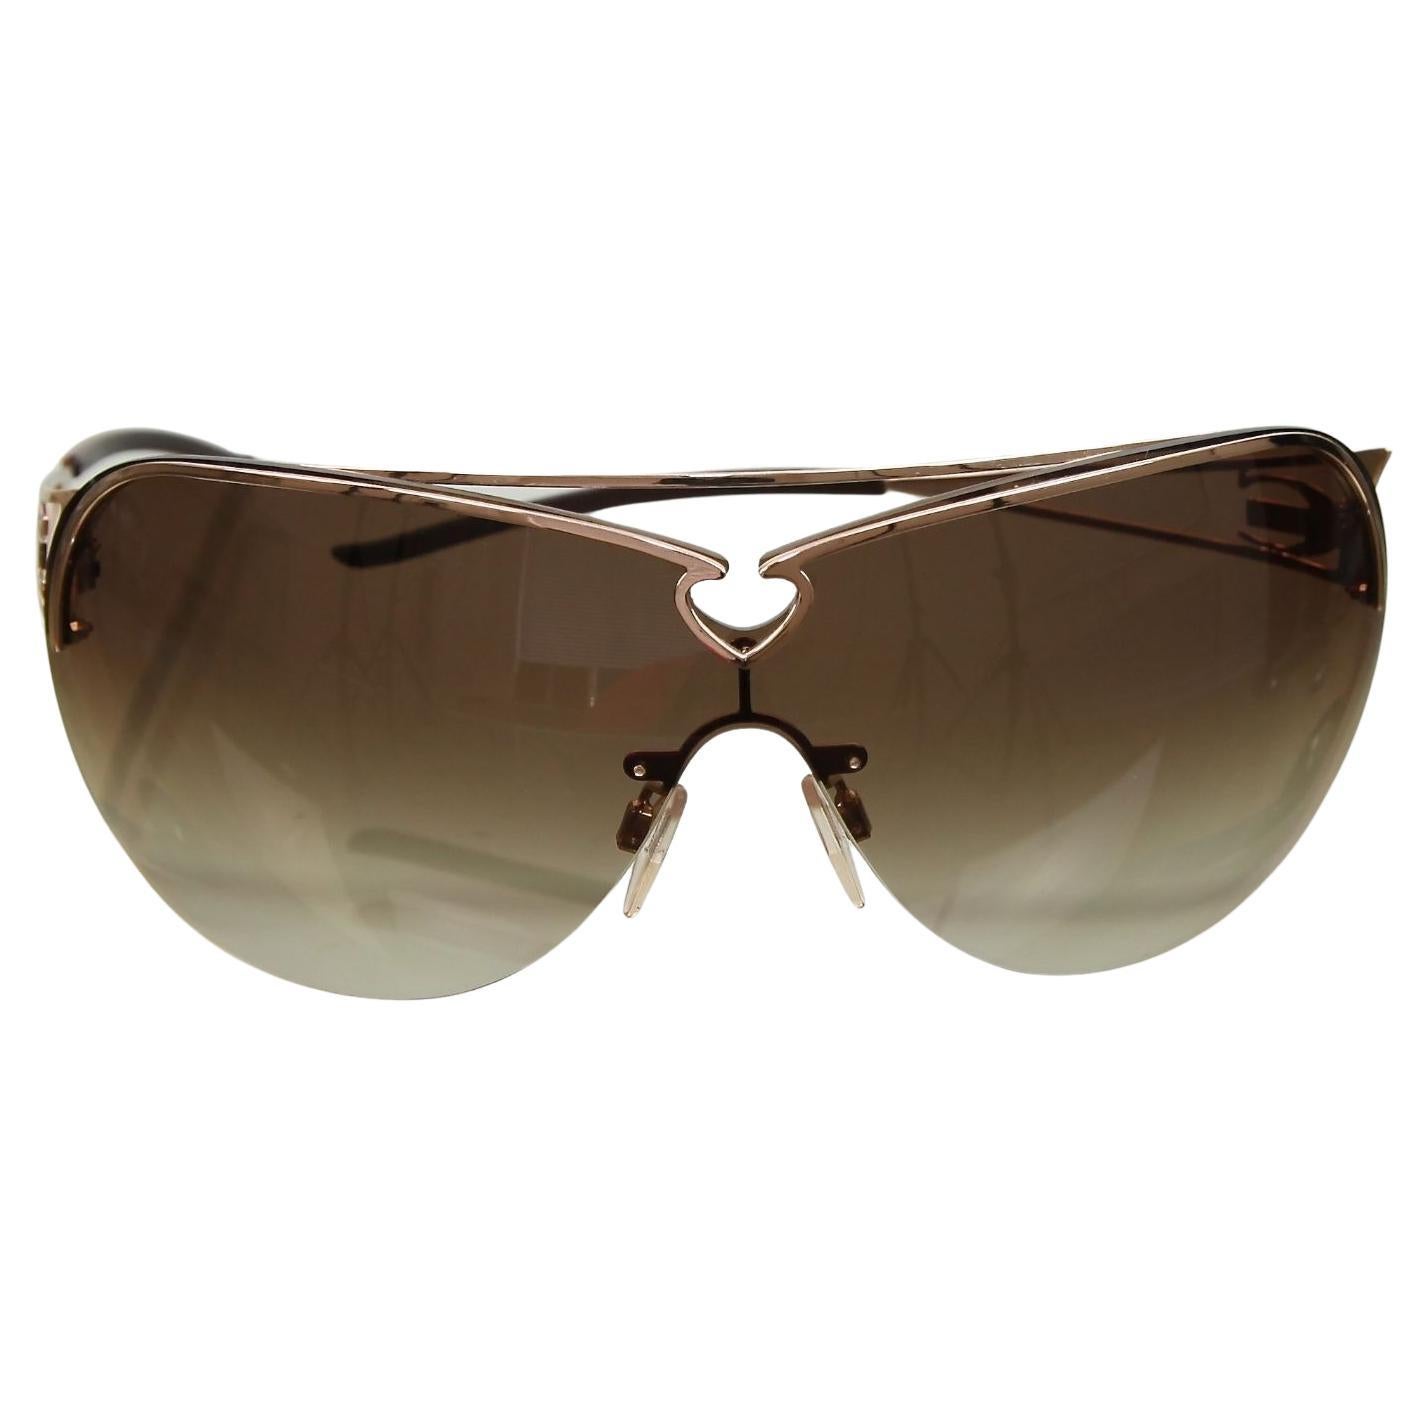 ROBERTO CAVALLI Brown Sunglasses Gradient Lens Shield Gold Hardware W/Case For Sale